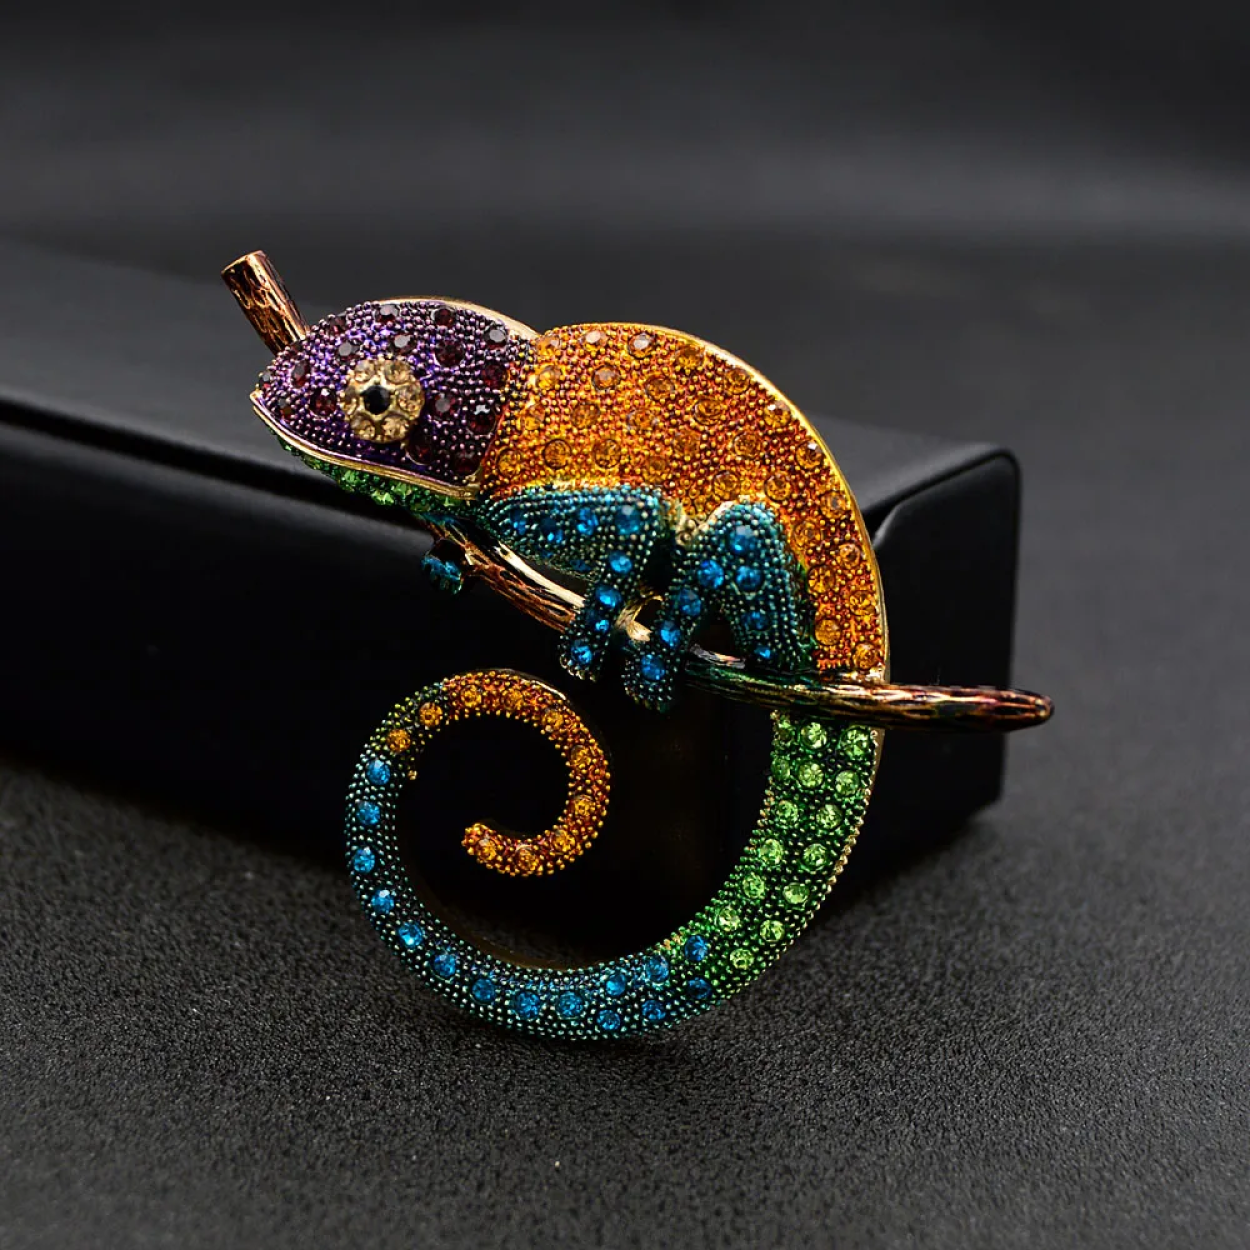 3: Colorful Gemstone Chameleon Lapel Pin